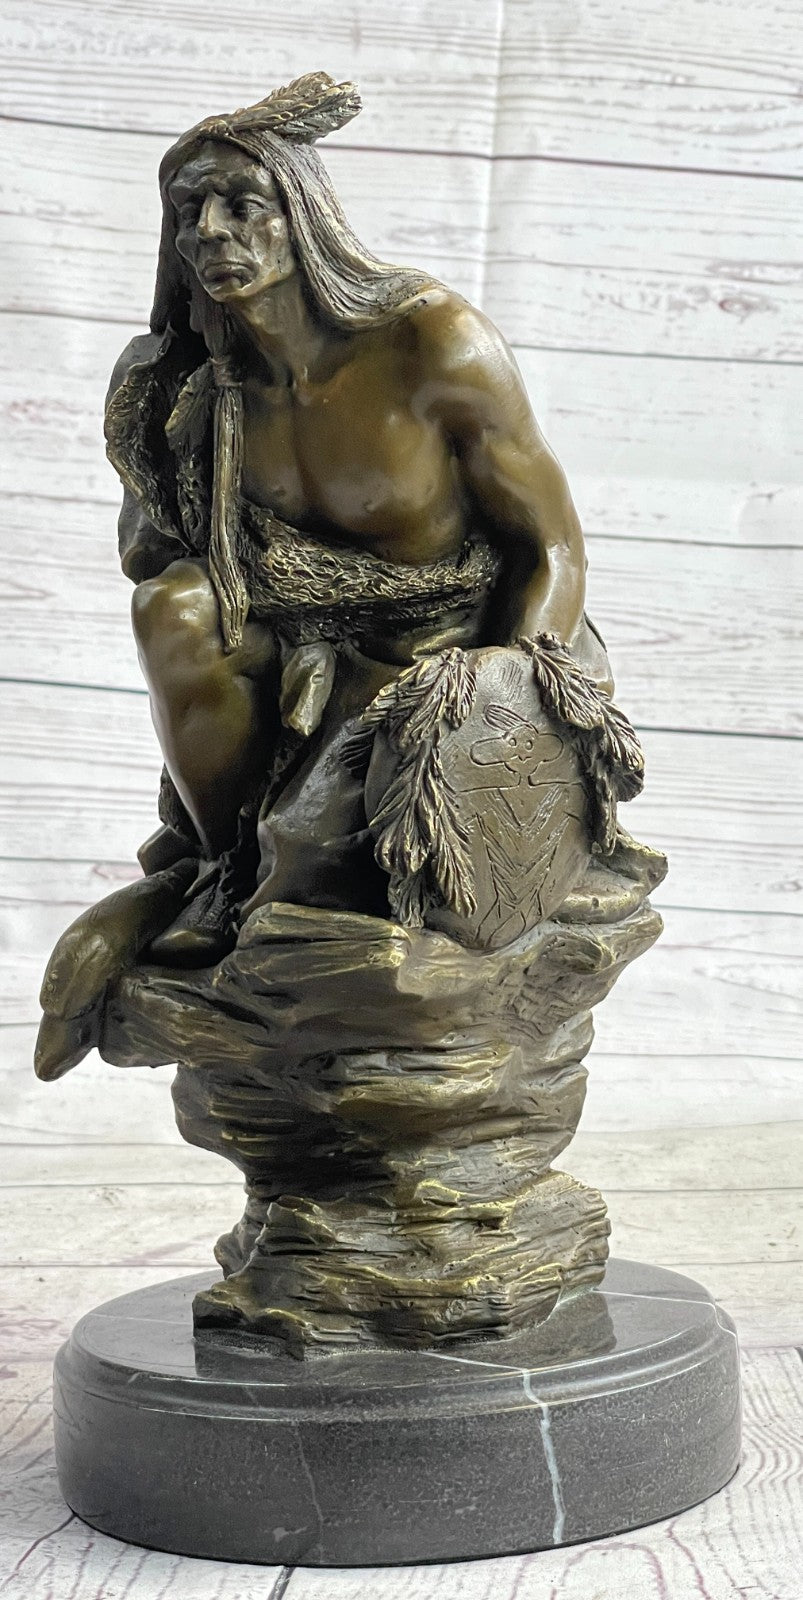 Signed American Indian Warrior Bronze Sculpture Art Figurine Statue Figure Deco